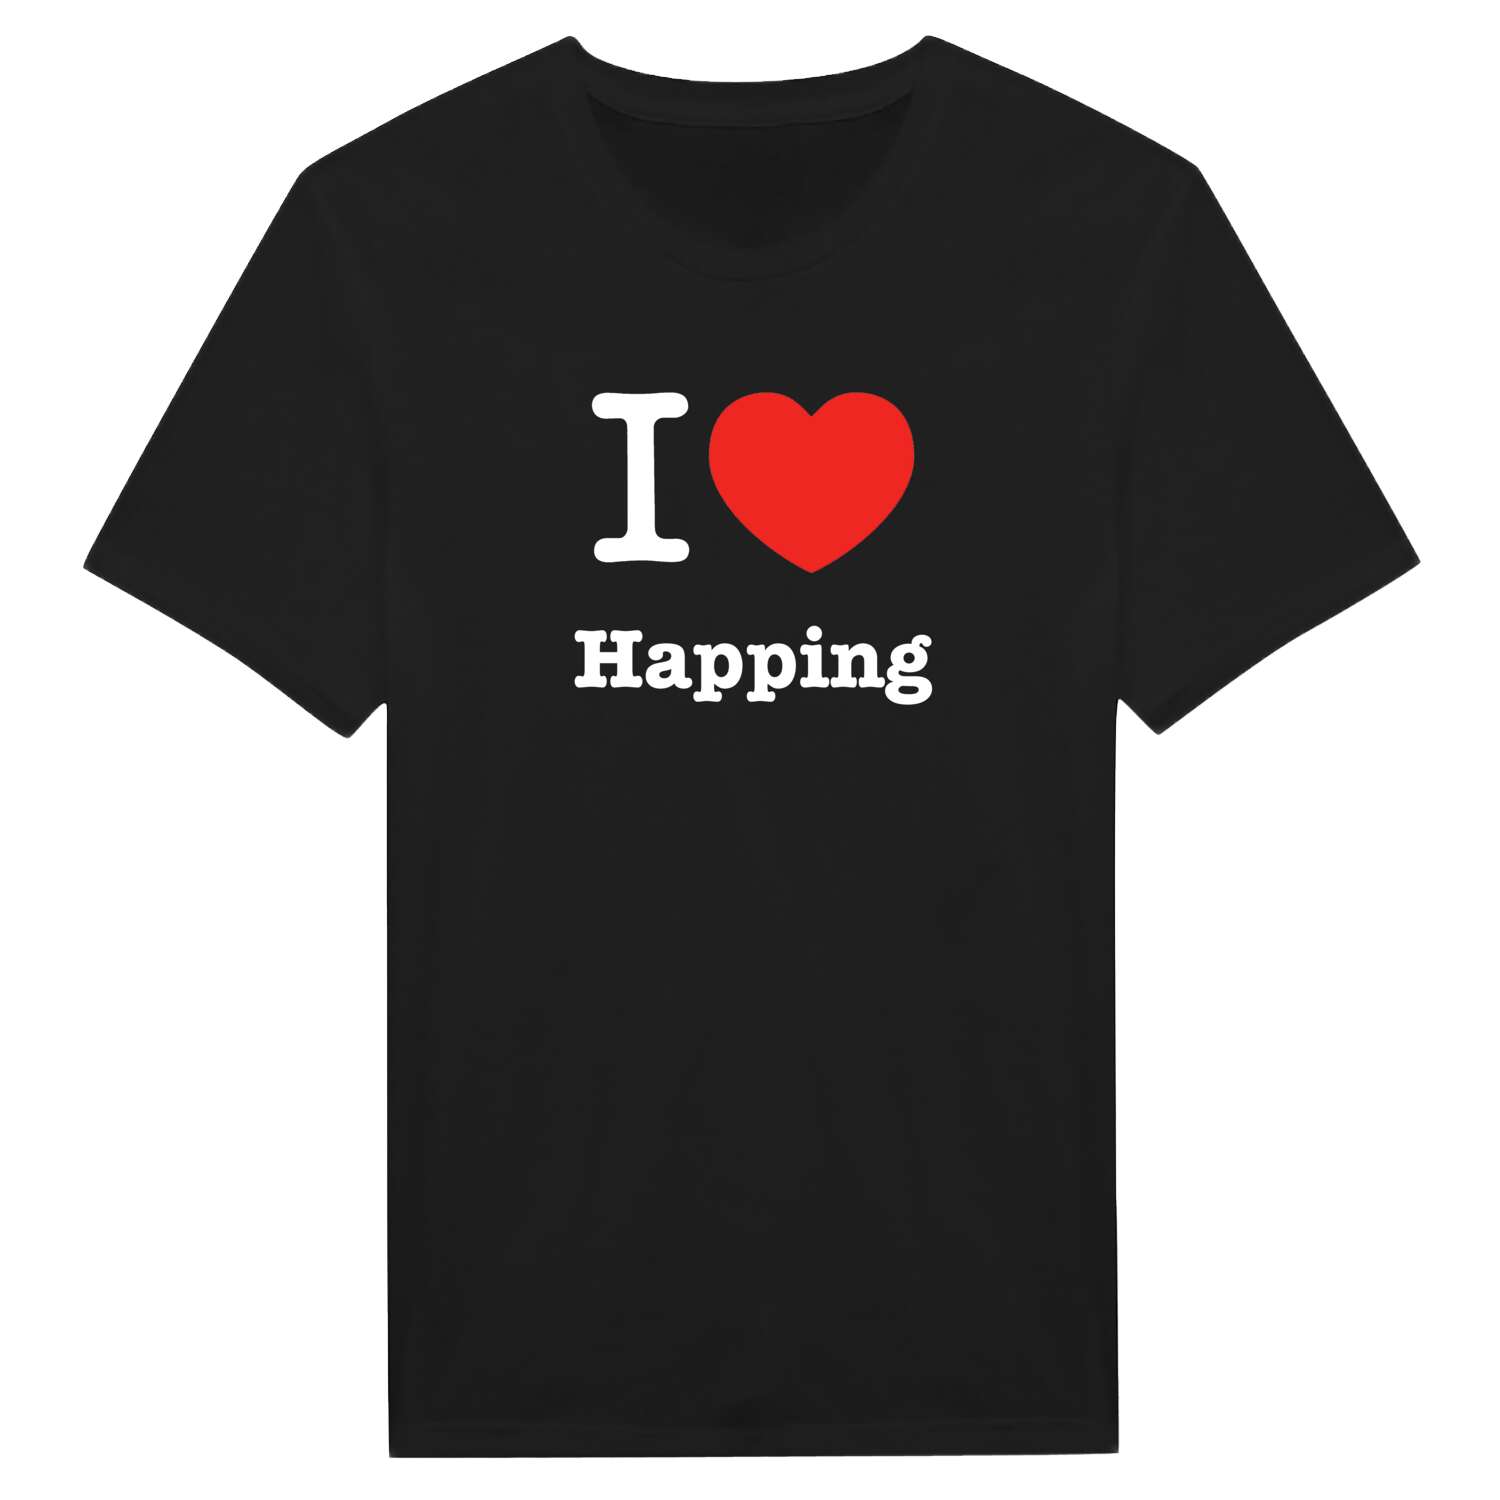 Happing T-Shirt »I love«